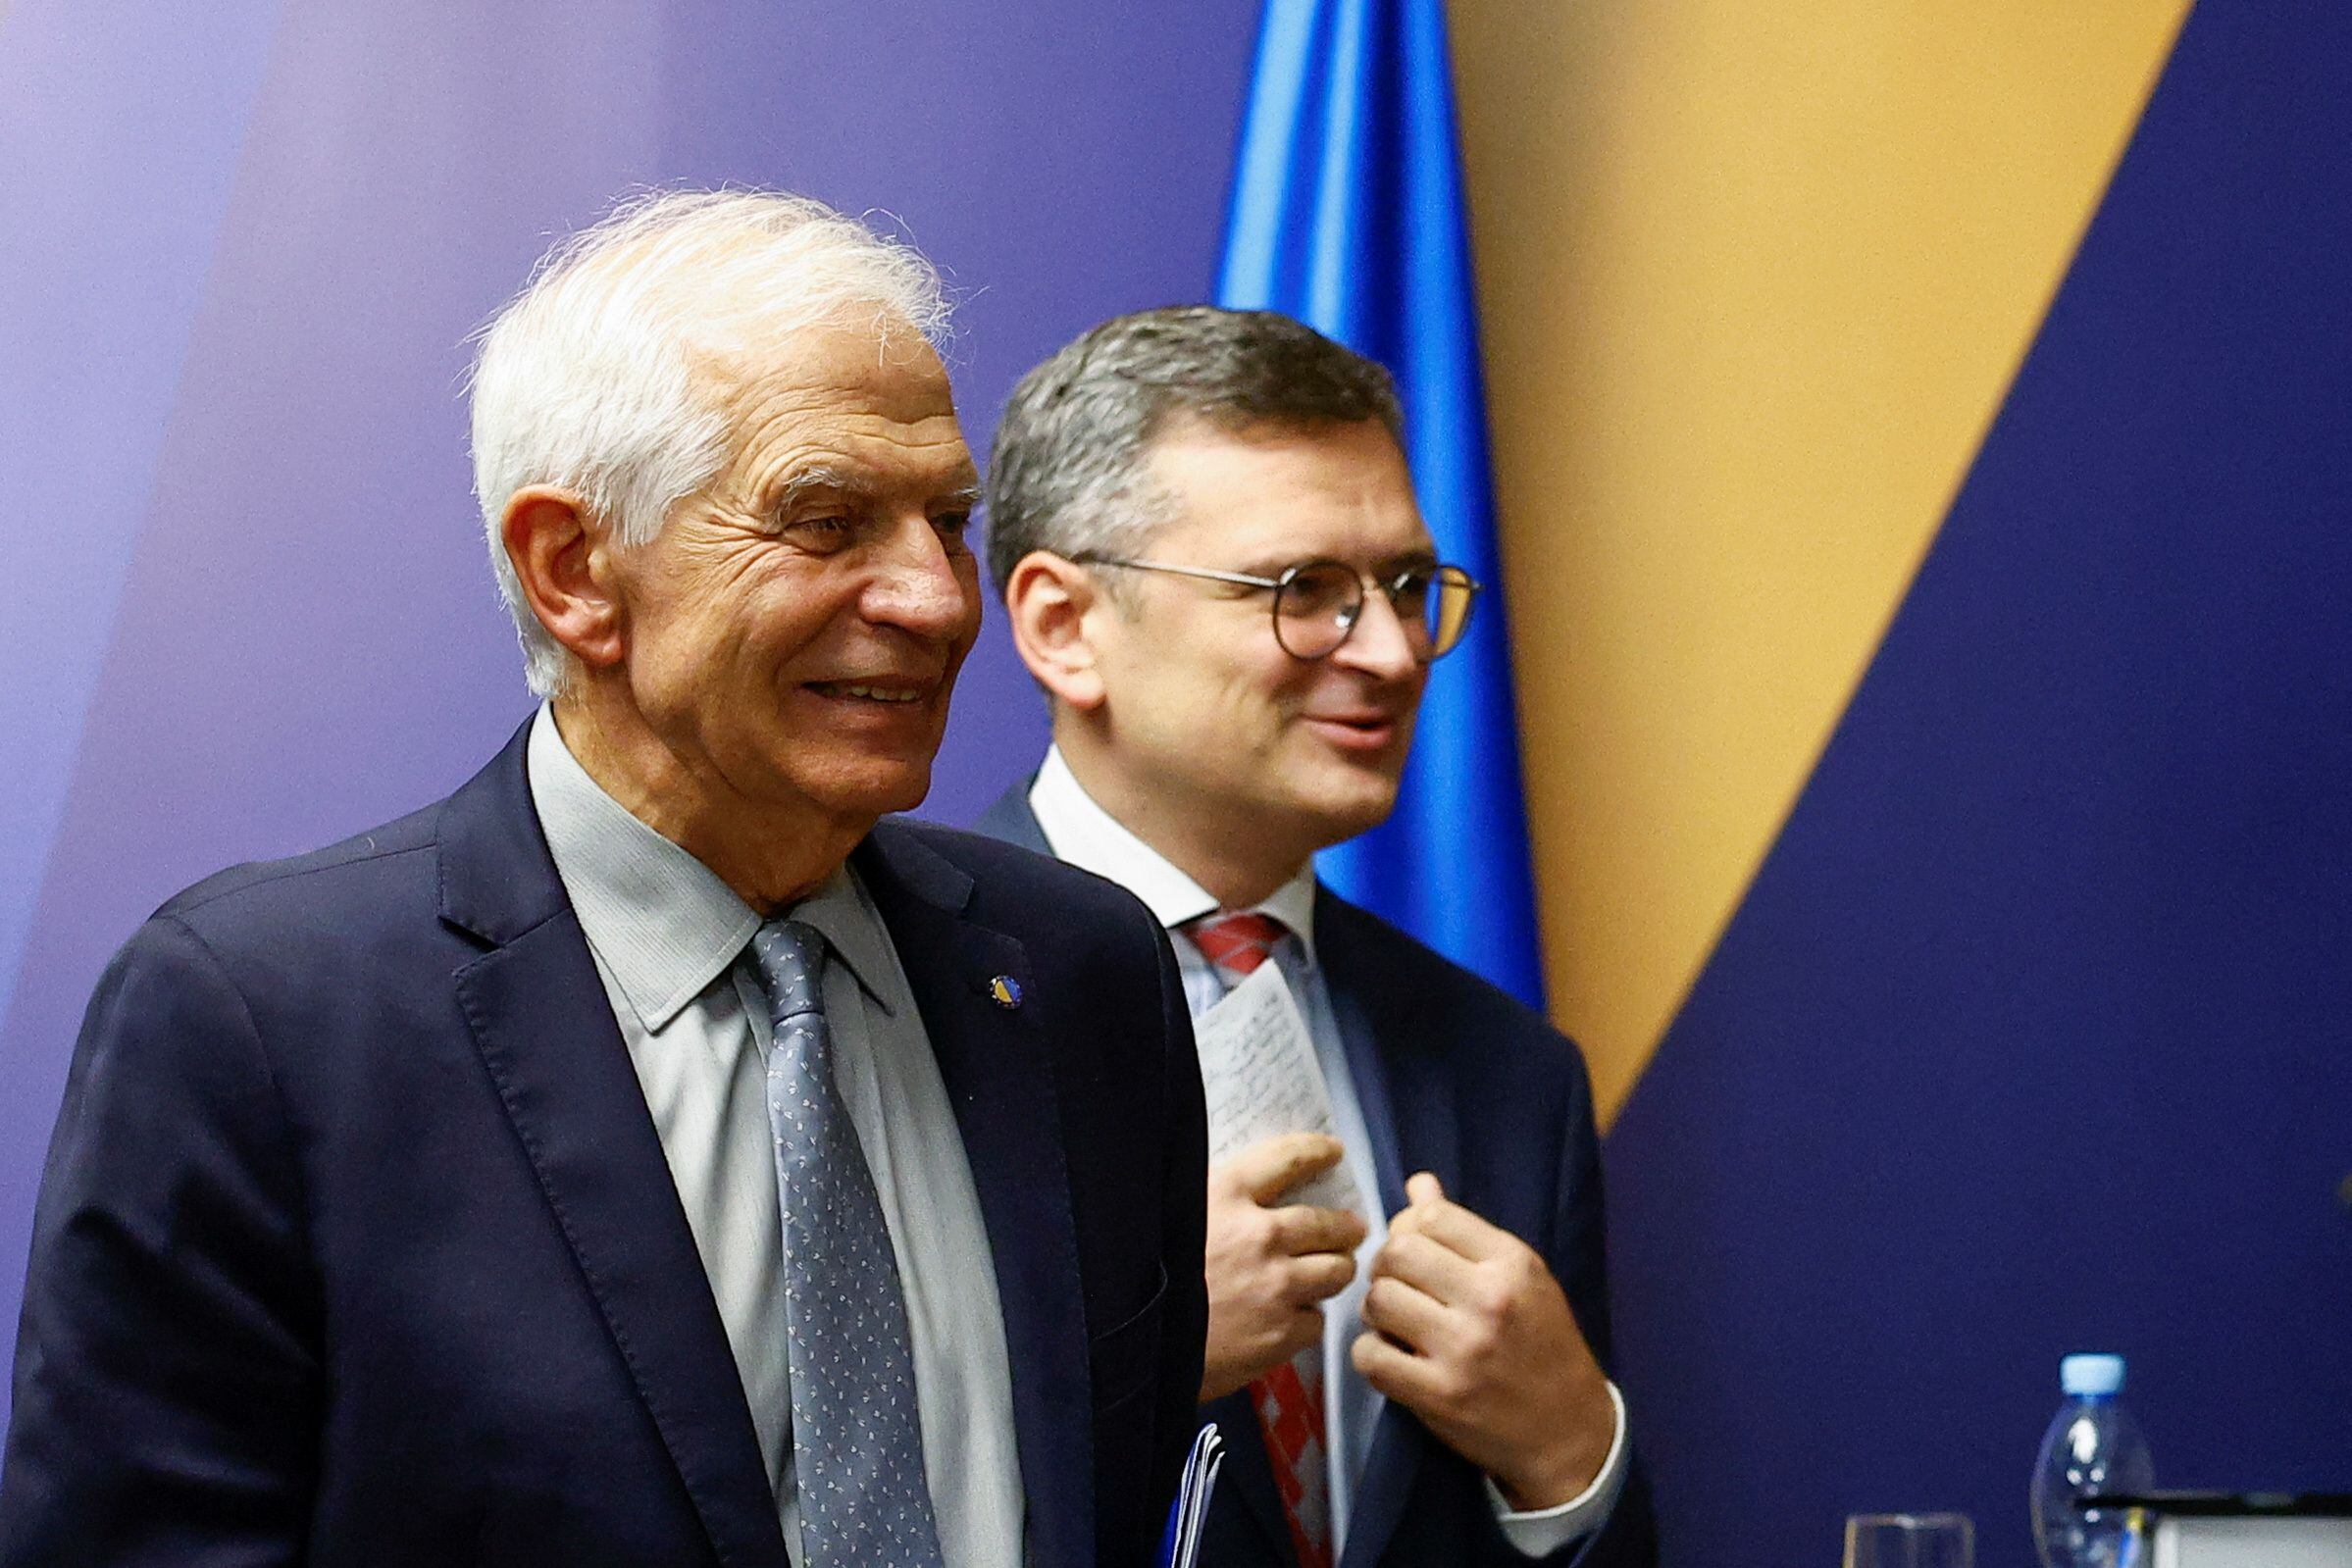 Borrel y Kuleba durnate la conferencia de prensa (REUTERS/Valentyn Ogirenko)